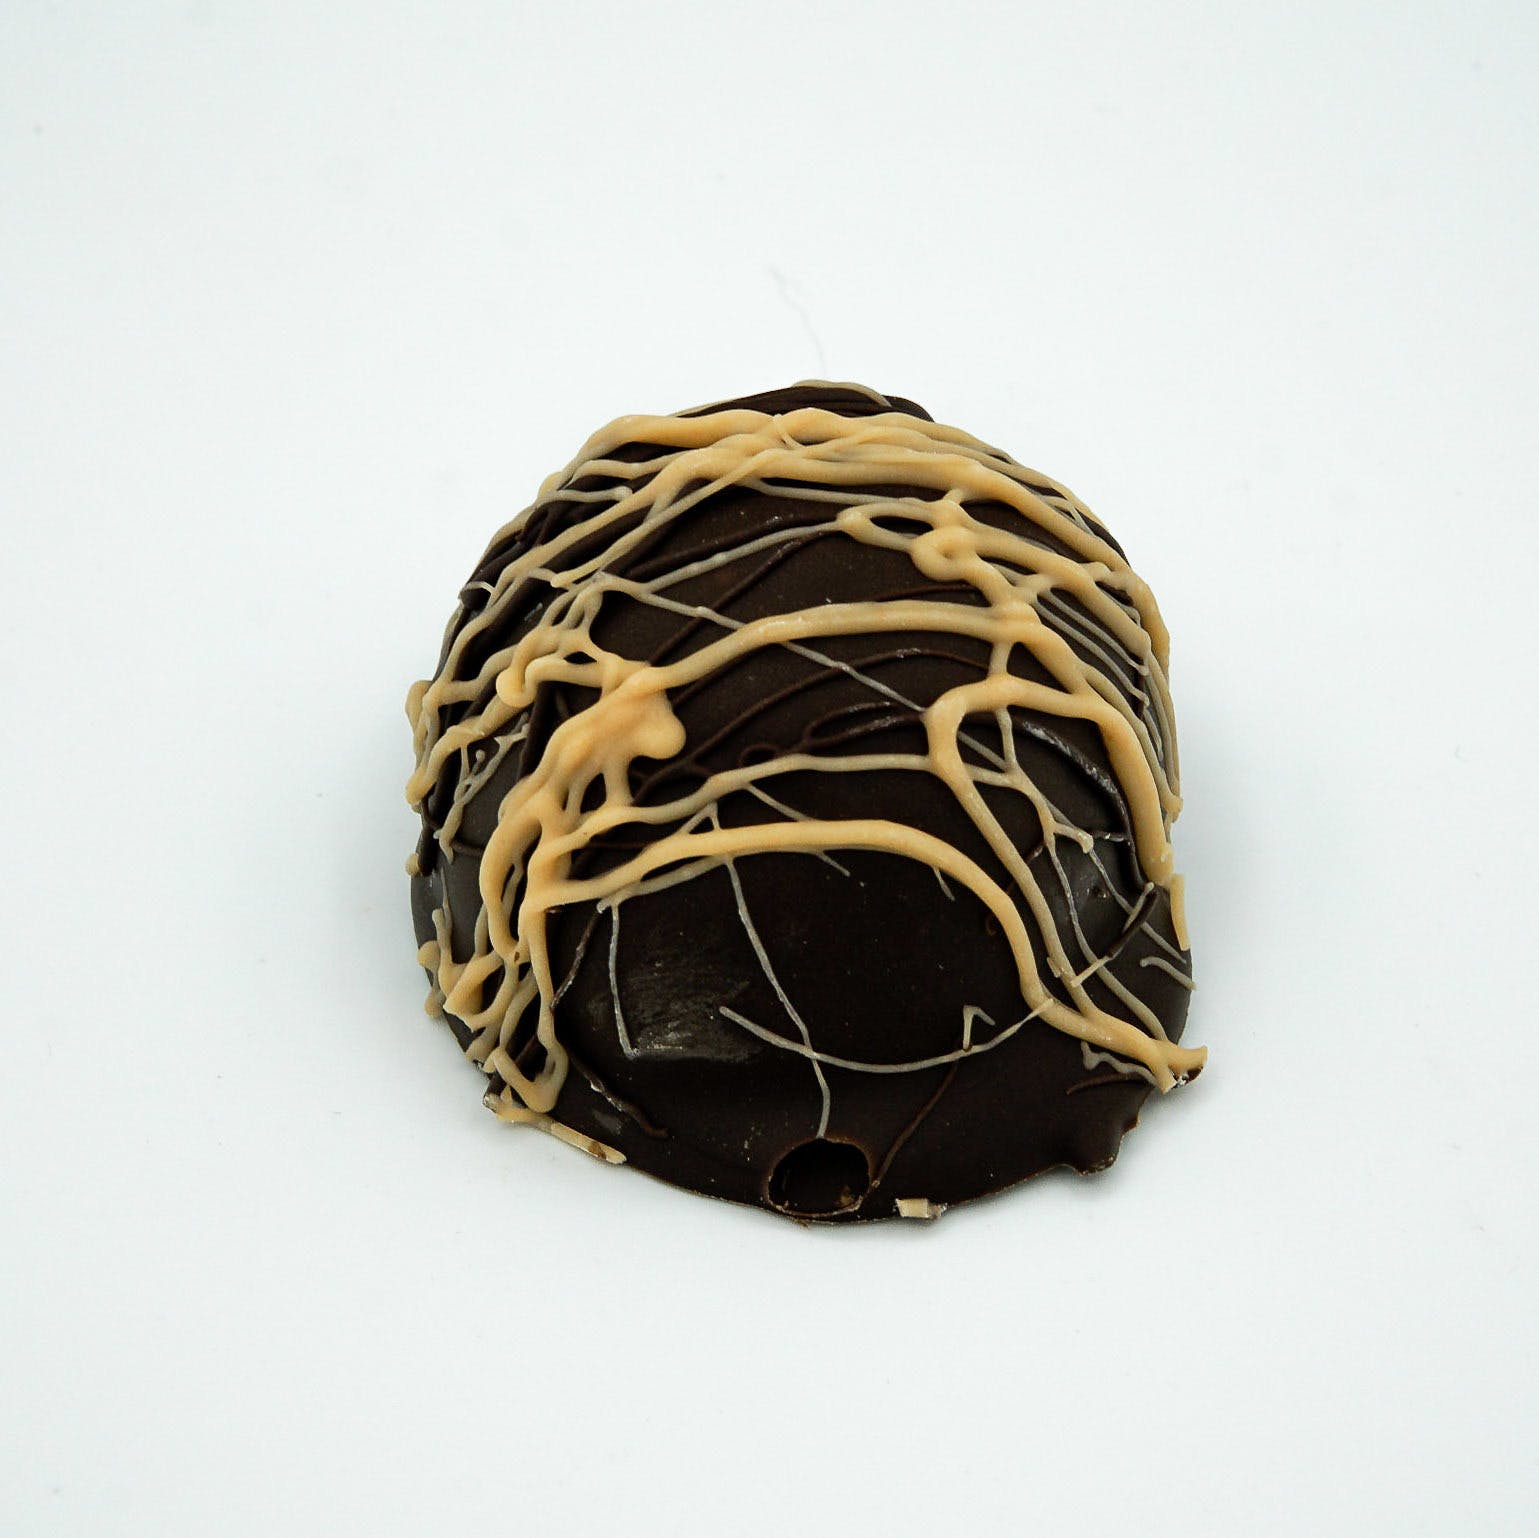 KandyMan Orange Chocolate Truffle 30mg each